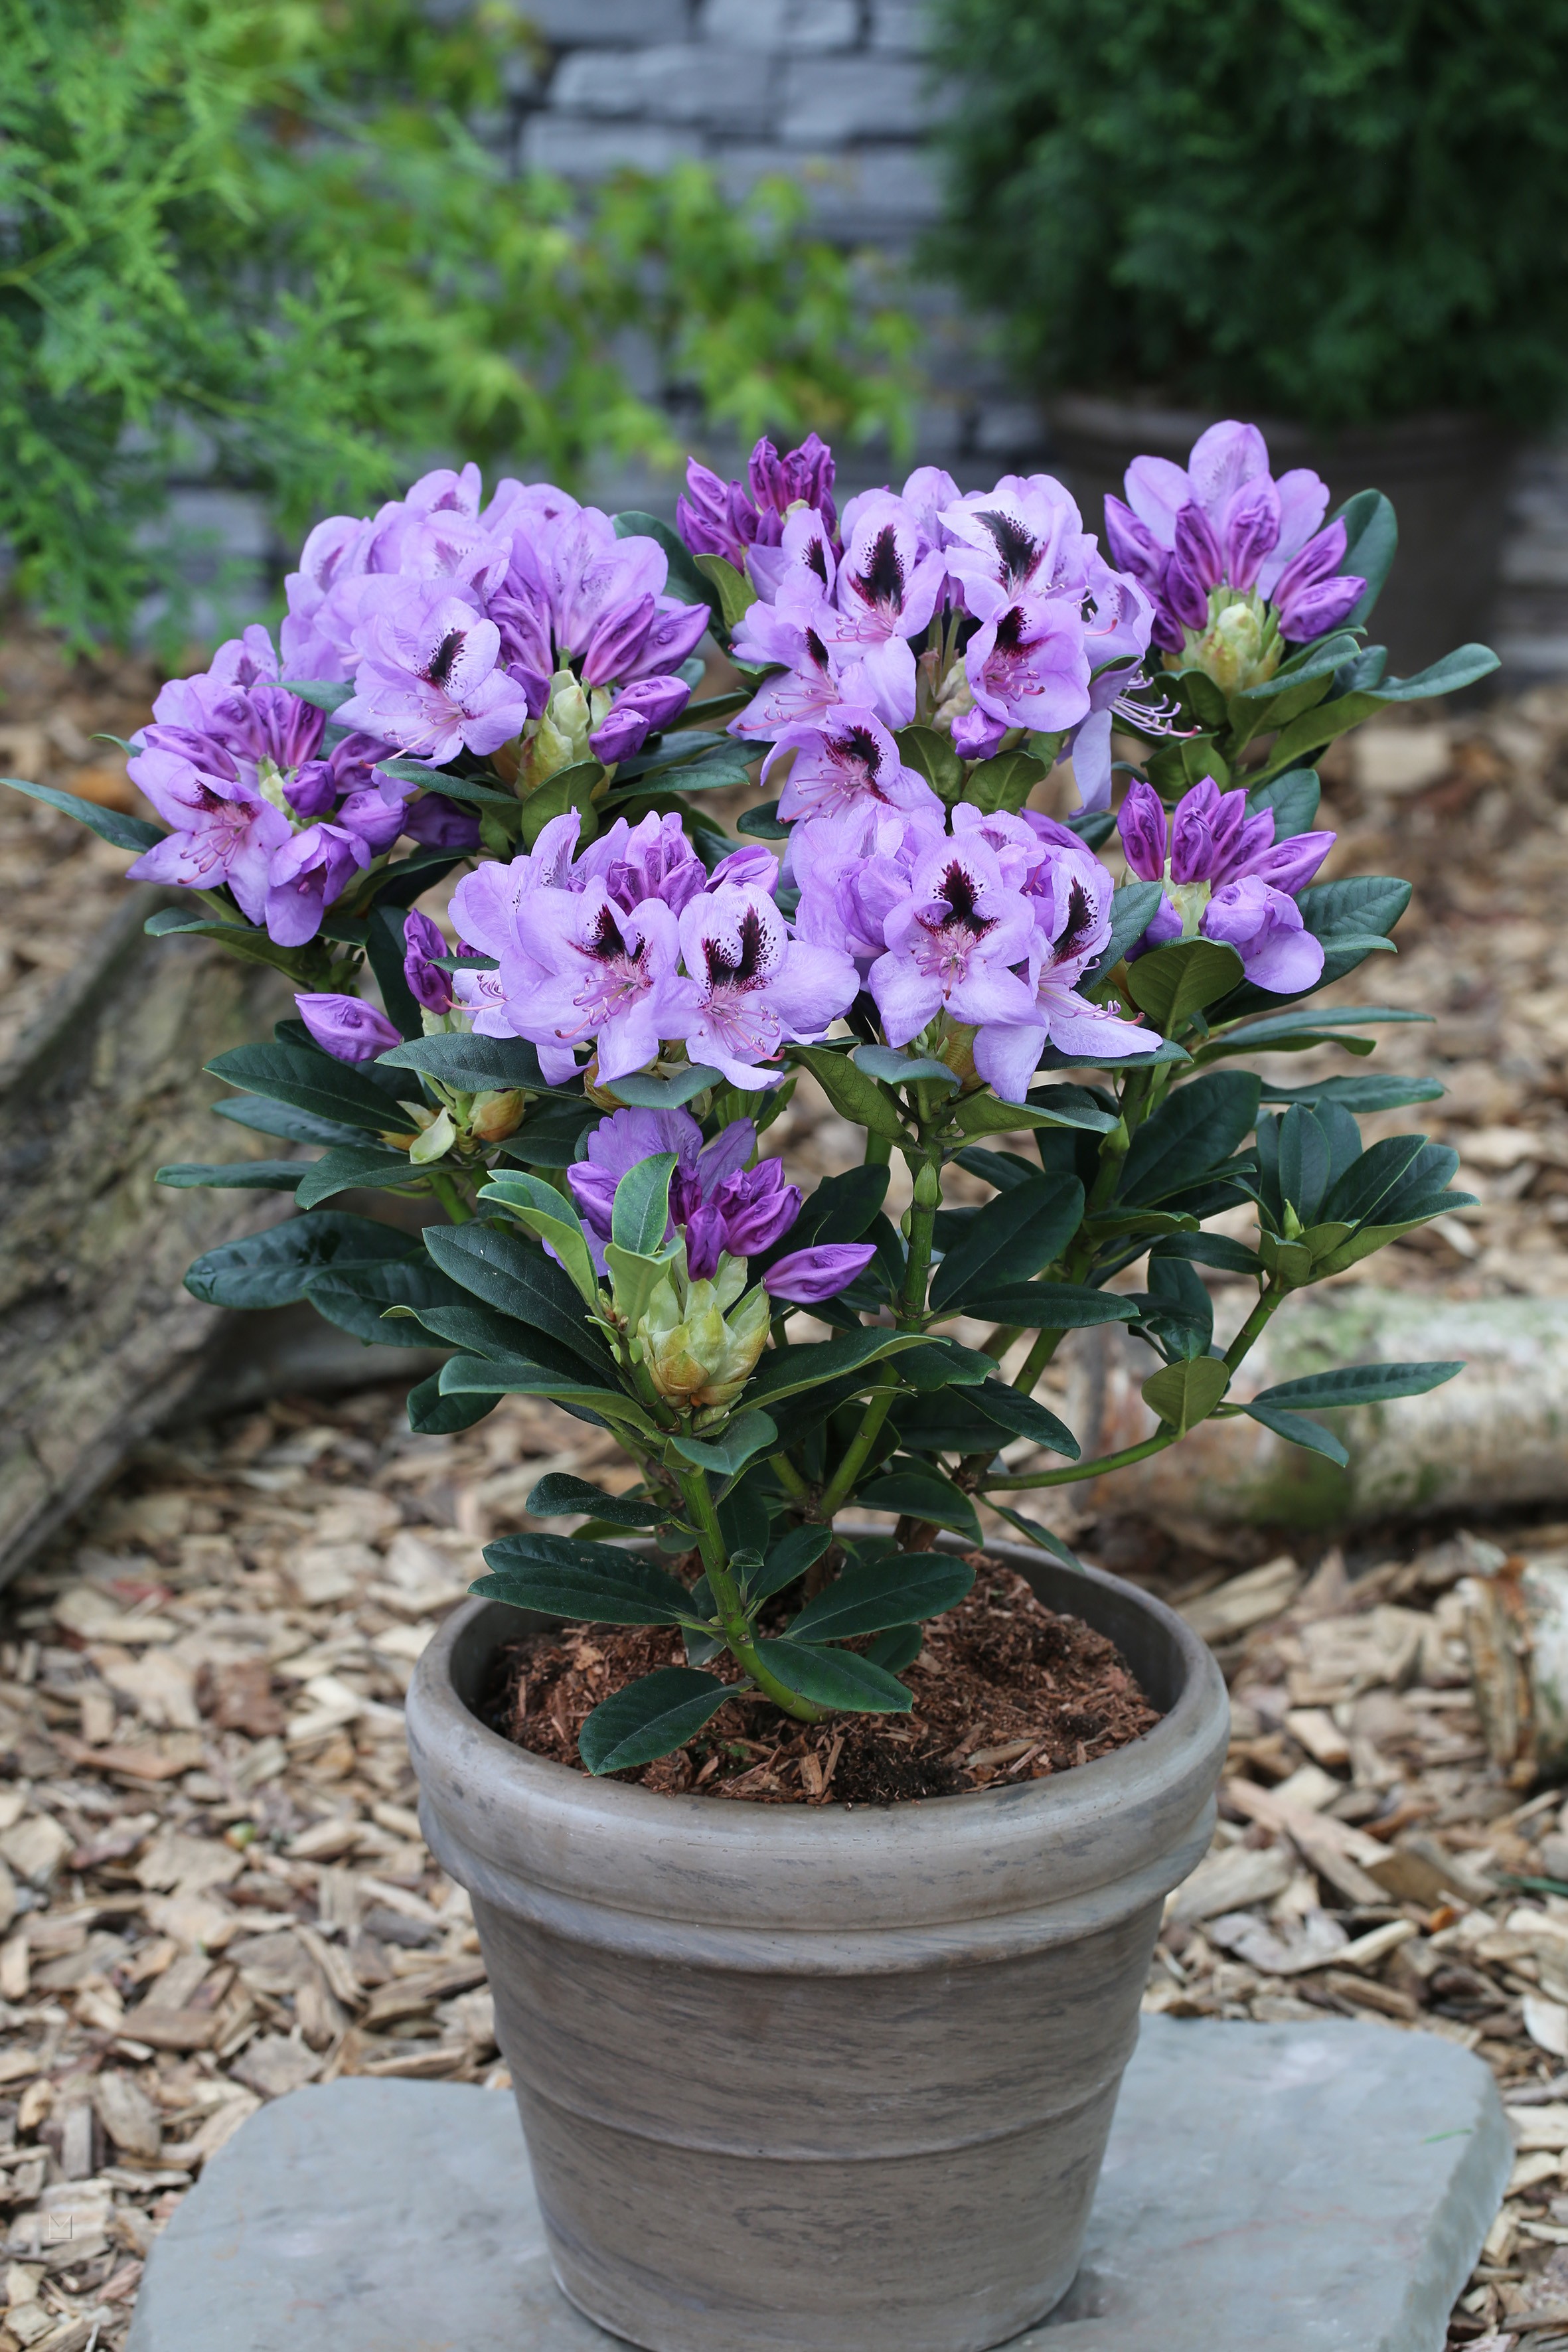 Rhododendron Hybride 'Metallica'